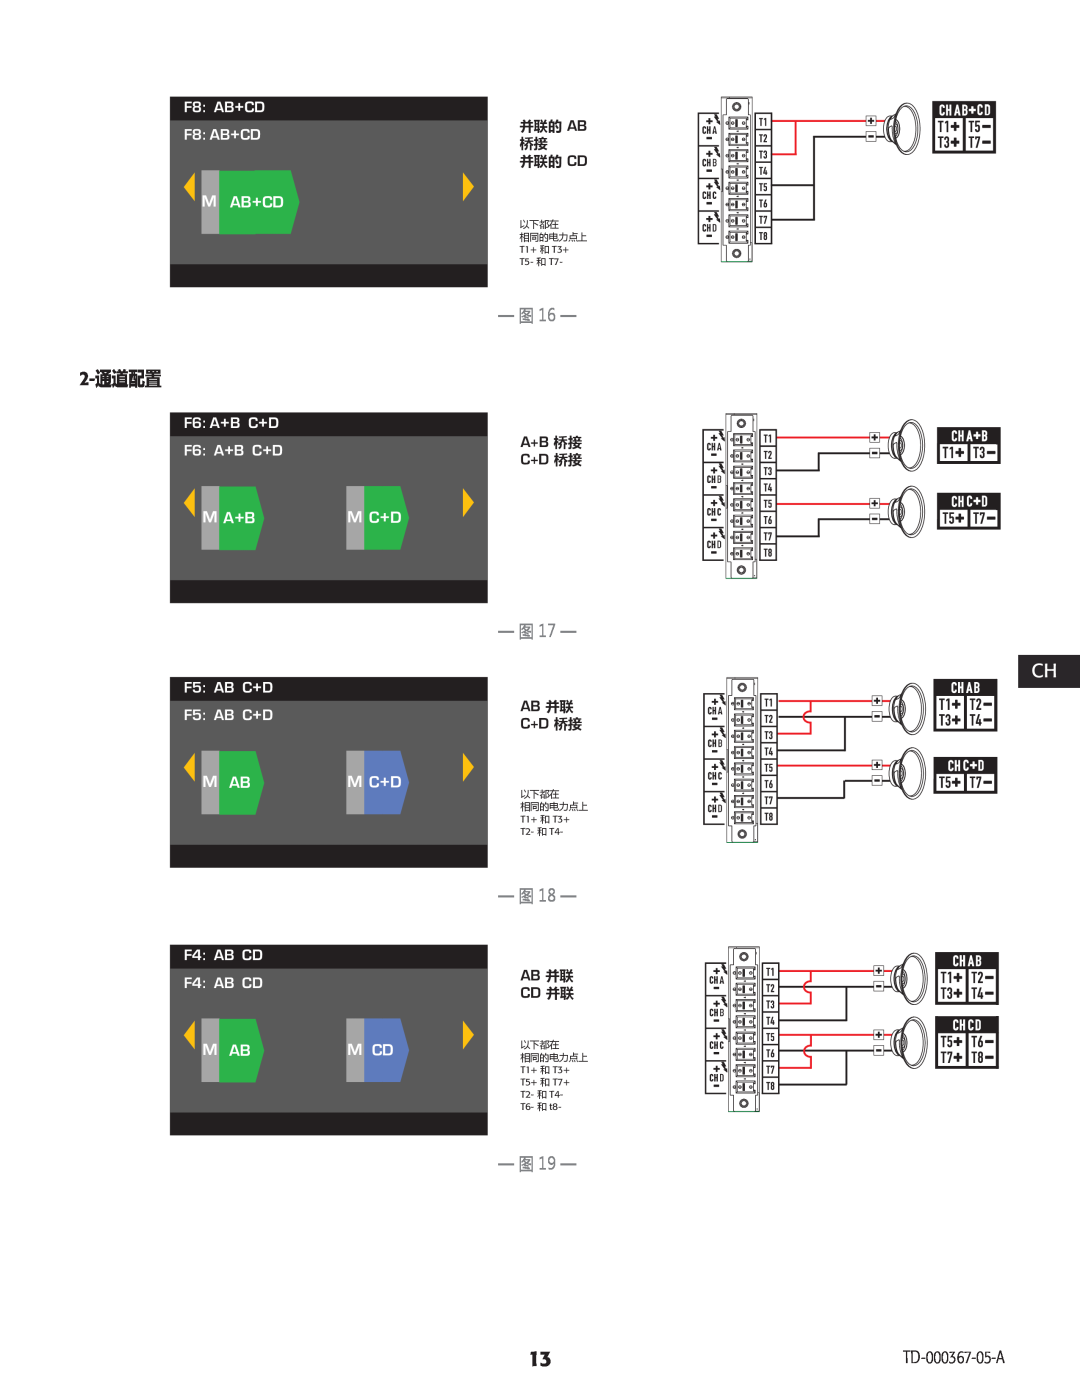 QSC Audio CXD4.5, CXD4.2 manual 2-通道配置, M Ab+Cd, 并AB联Parallel的 AB, A+B 桥Bridged接 C+D 桥Bridged接, AB Parallel并联 C+D 桥Bridged接 